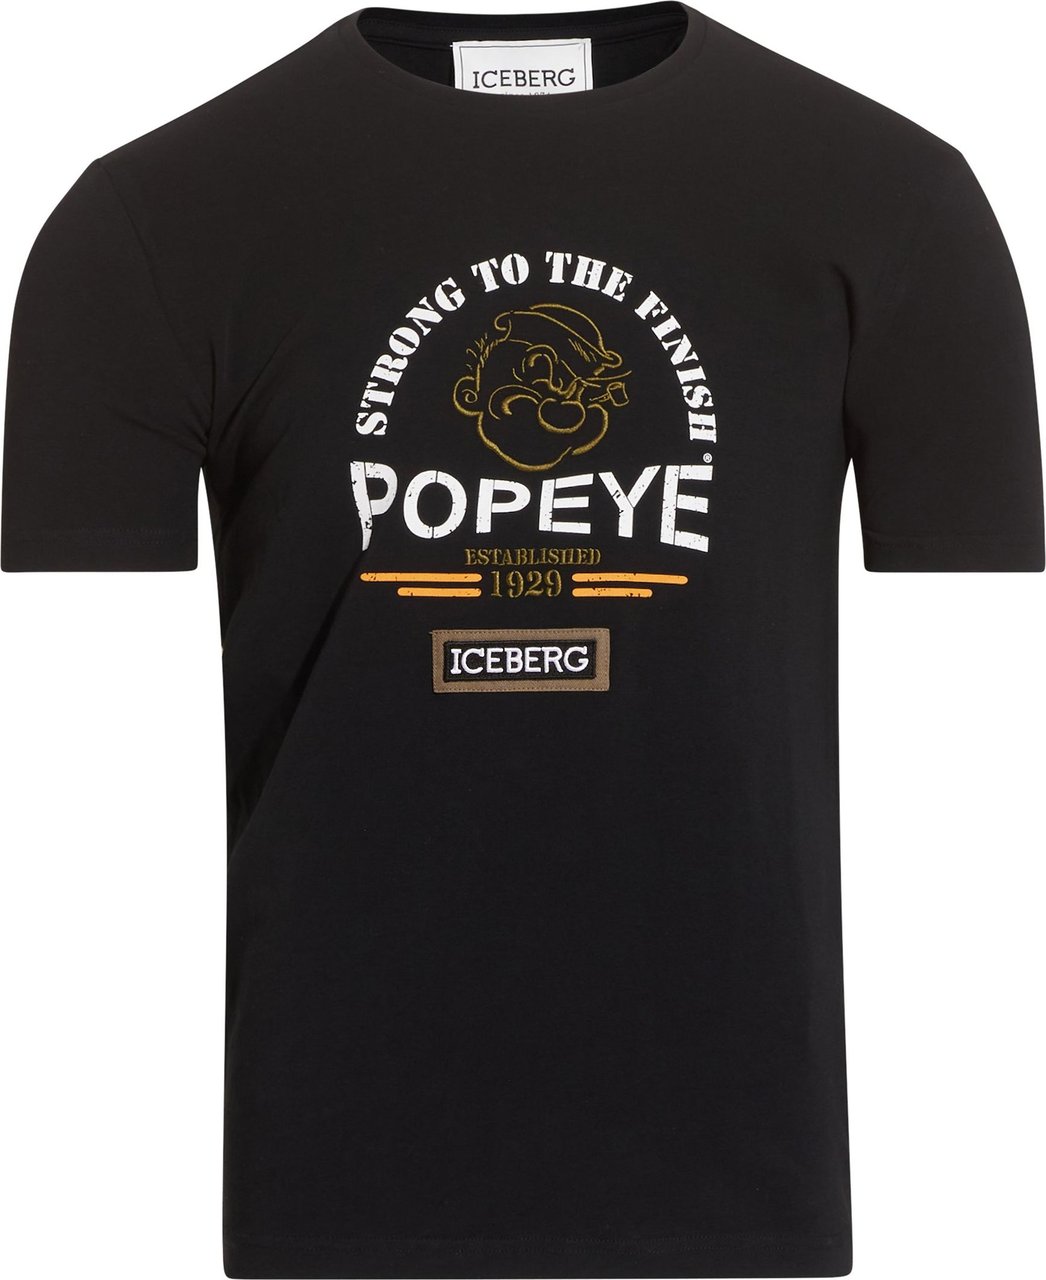 Iceberg Popeye Strong T-shirt Black Black